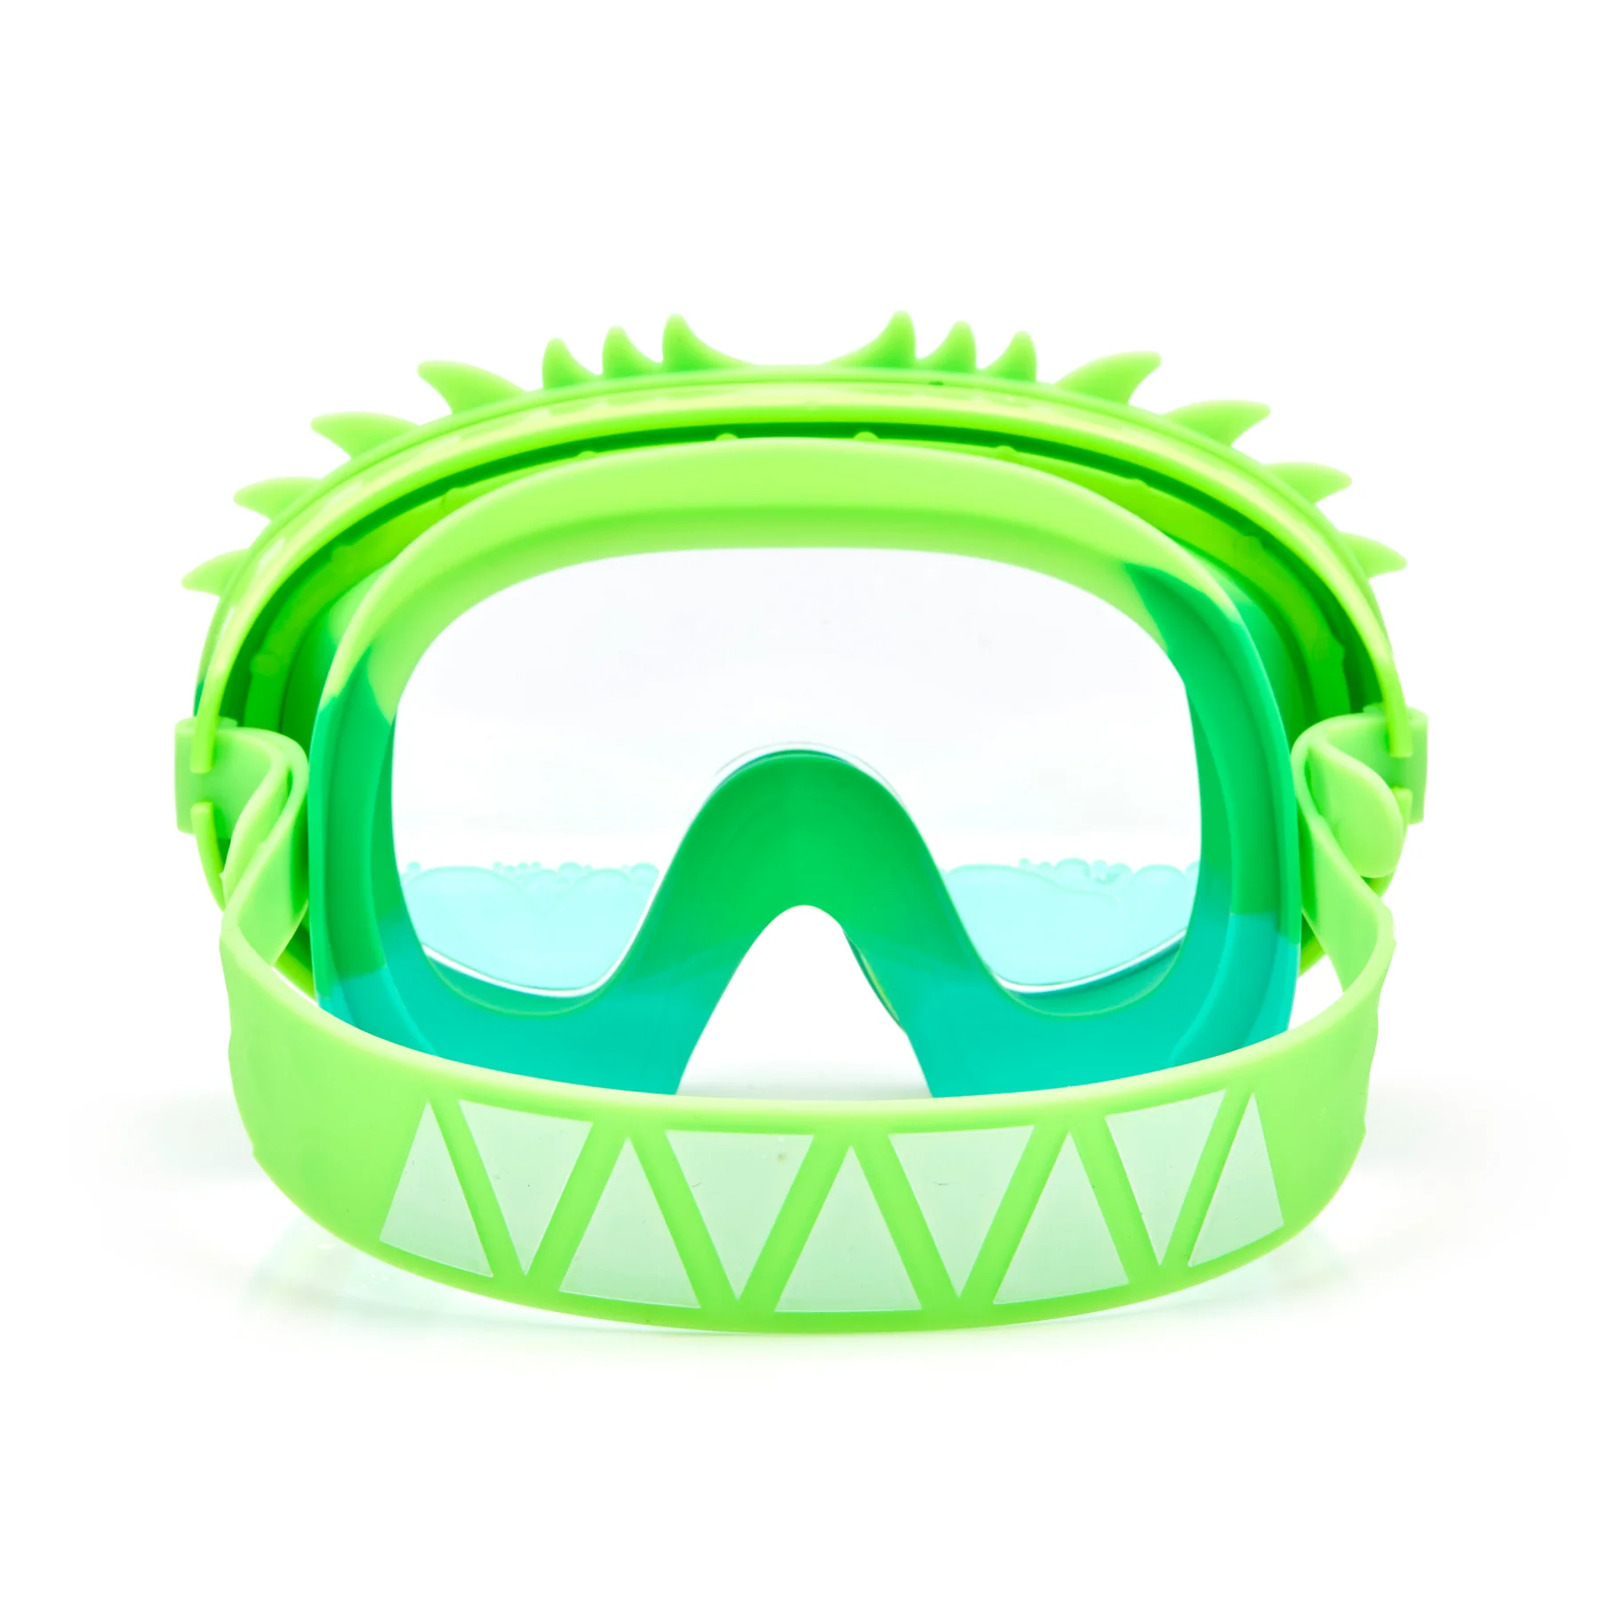 Bling 2o Green Glider the Dragon Swim Mask